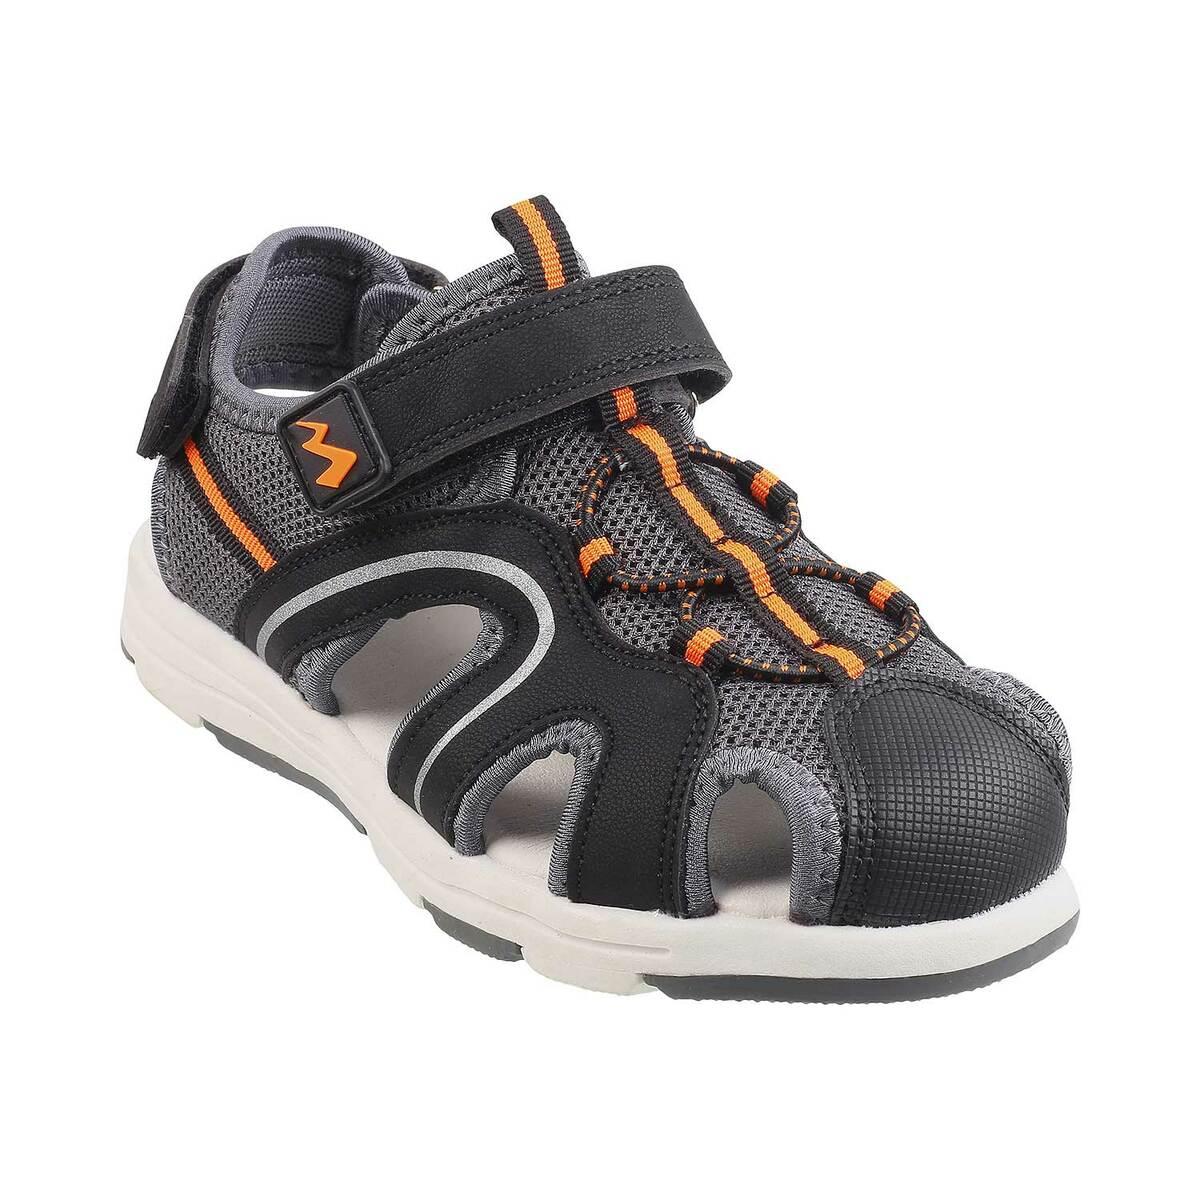 Buy Boys Black Casual Sandals Online - Metro Shoes